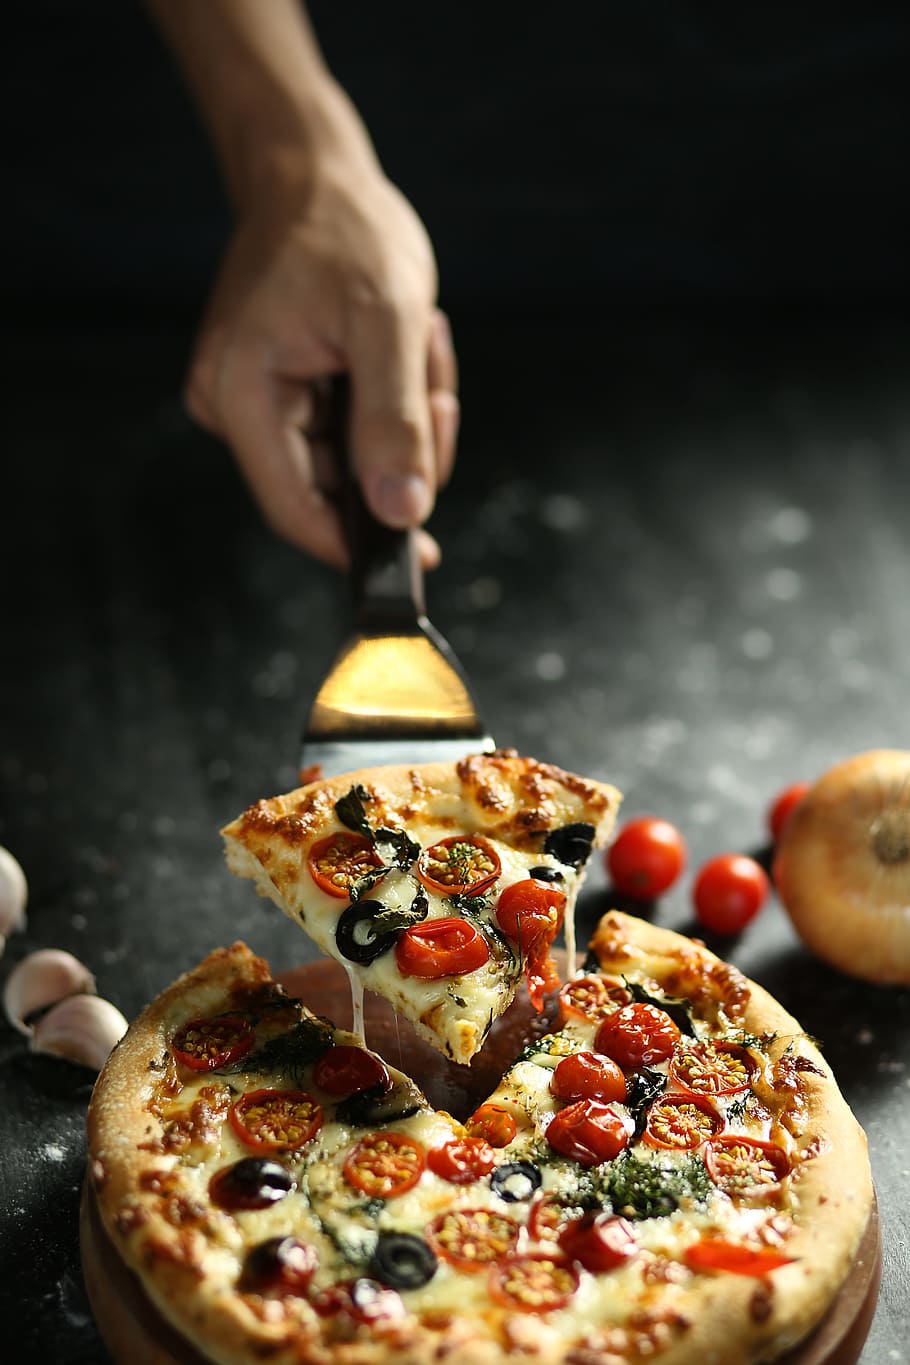 pizza de pepperoni redonda, pizza, pizza hut, cocina, dominos de pizza, pizza cerca de mí, comida y bebida, comida, mano humana, una persona